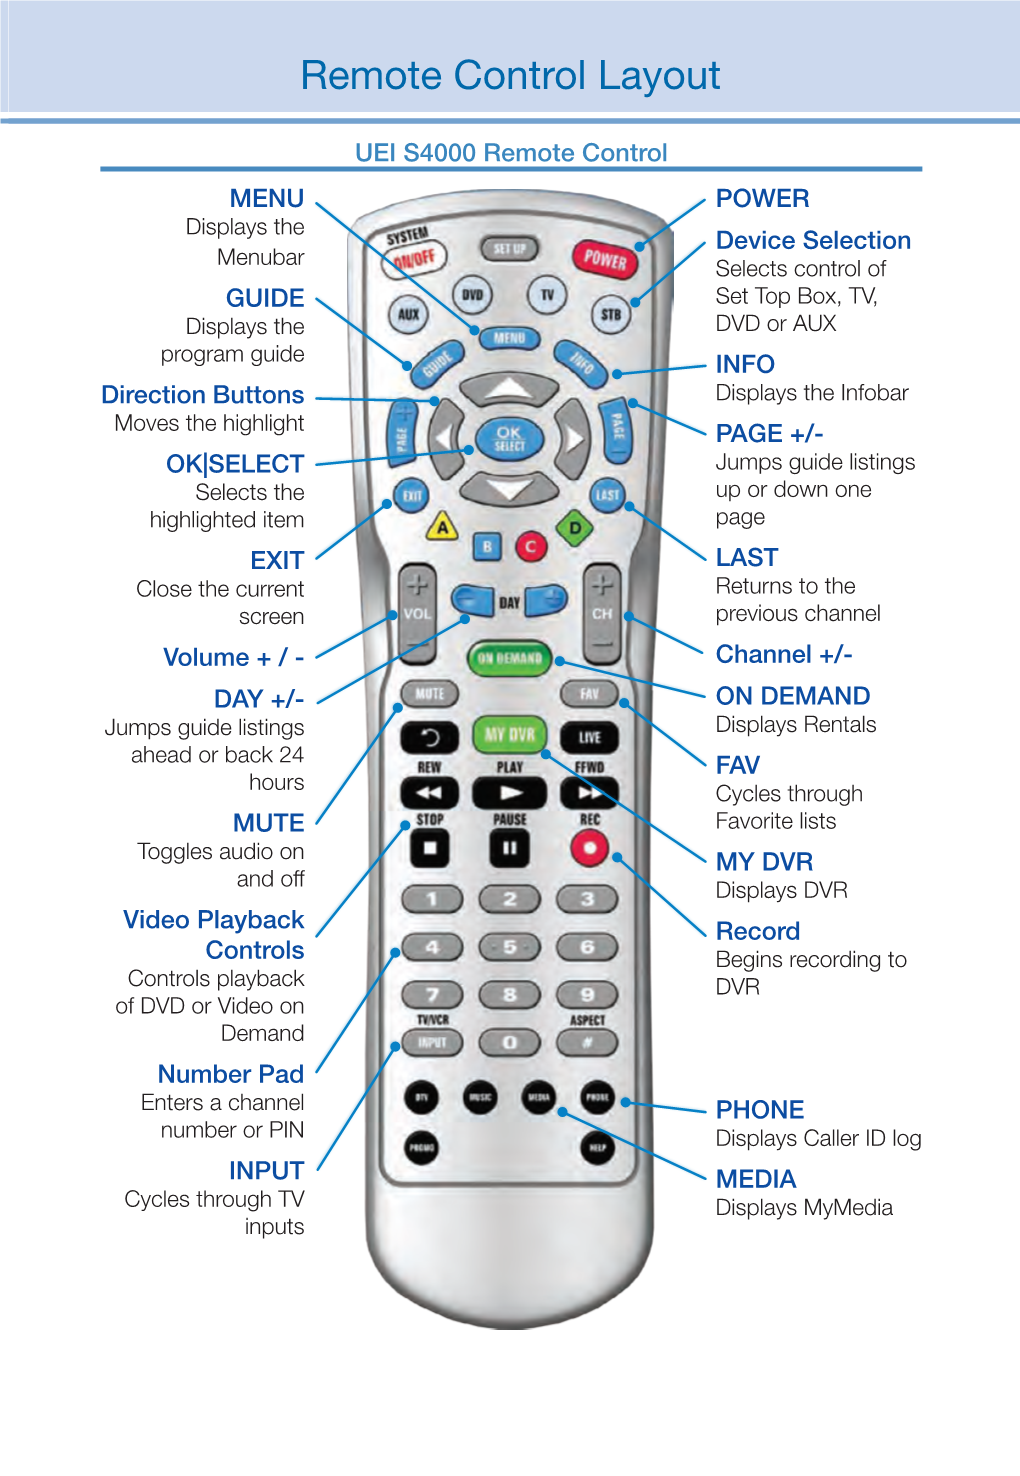 DTV Remote Control Basics